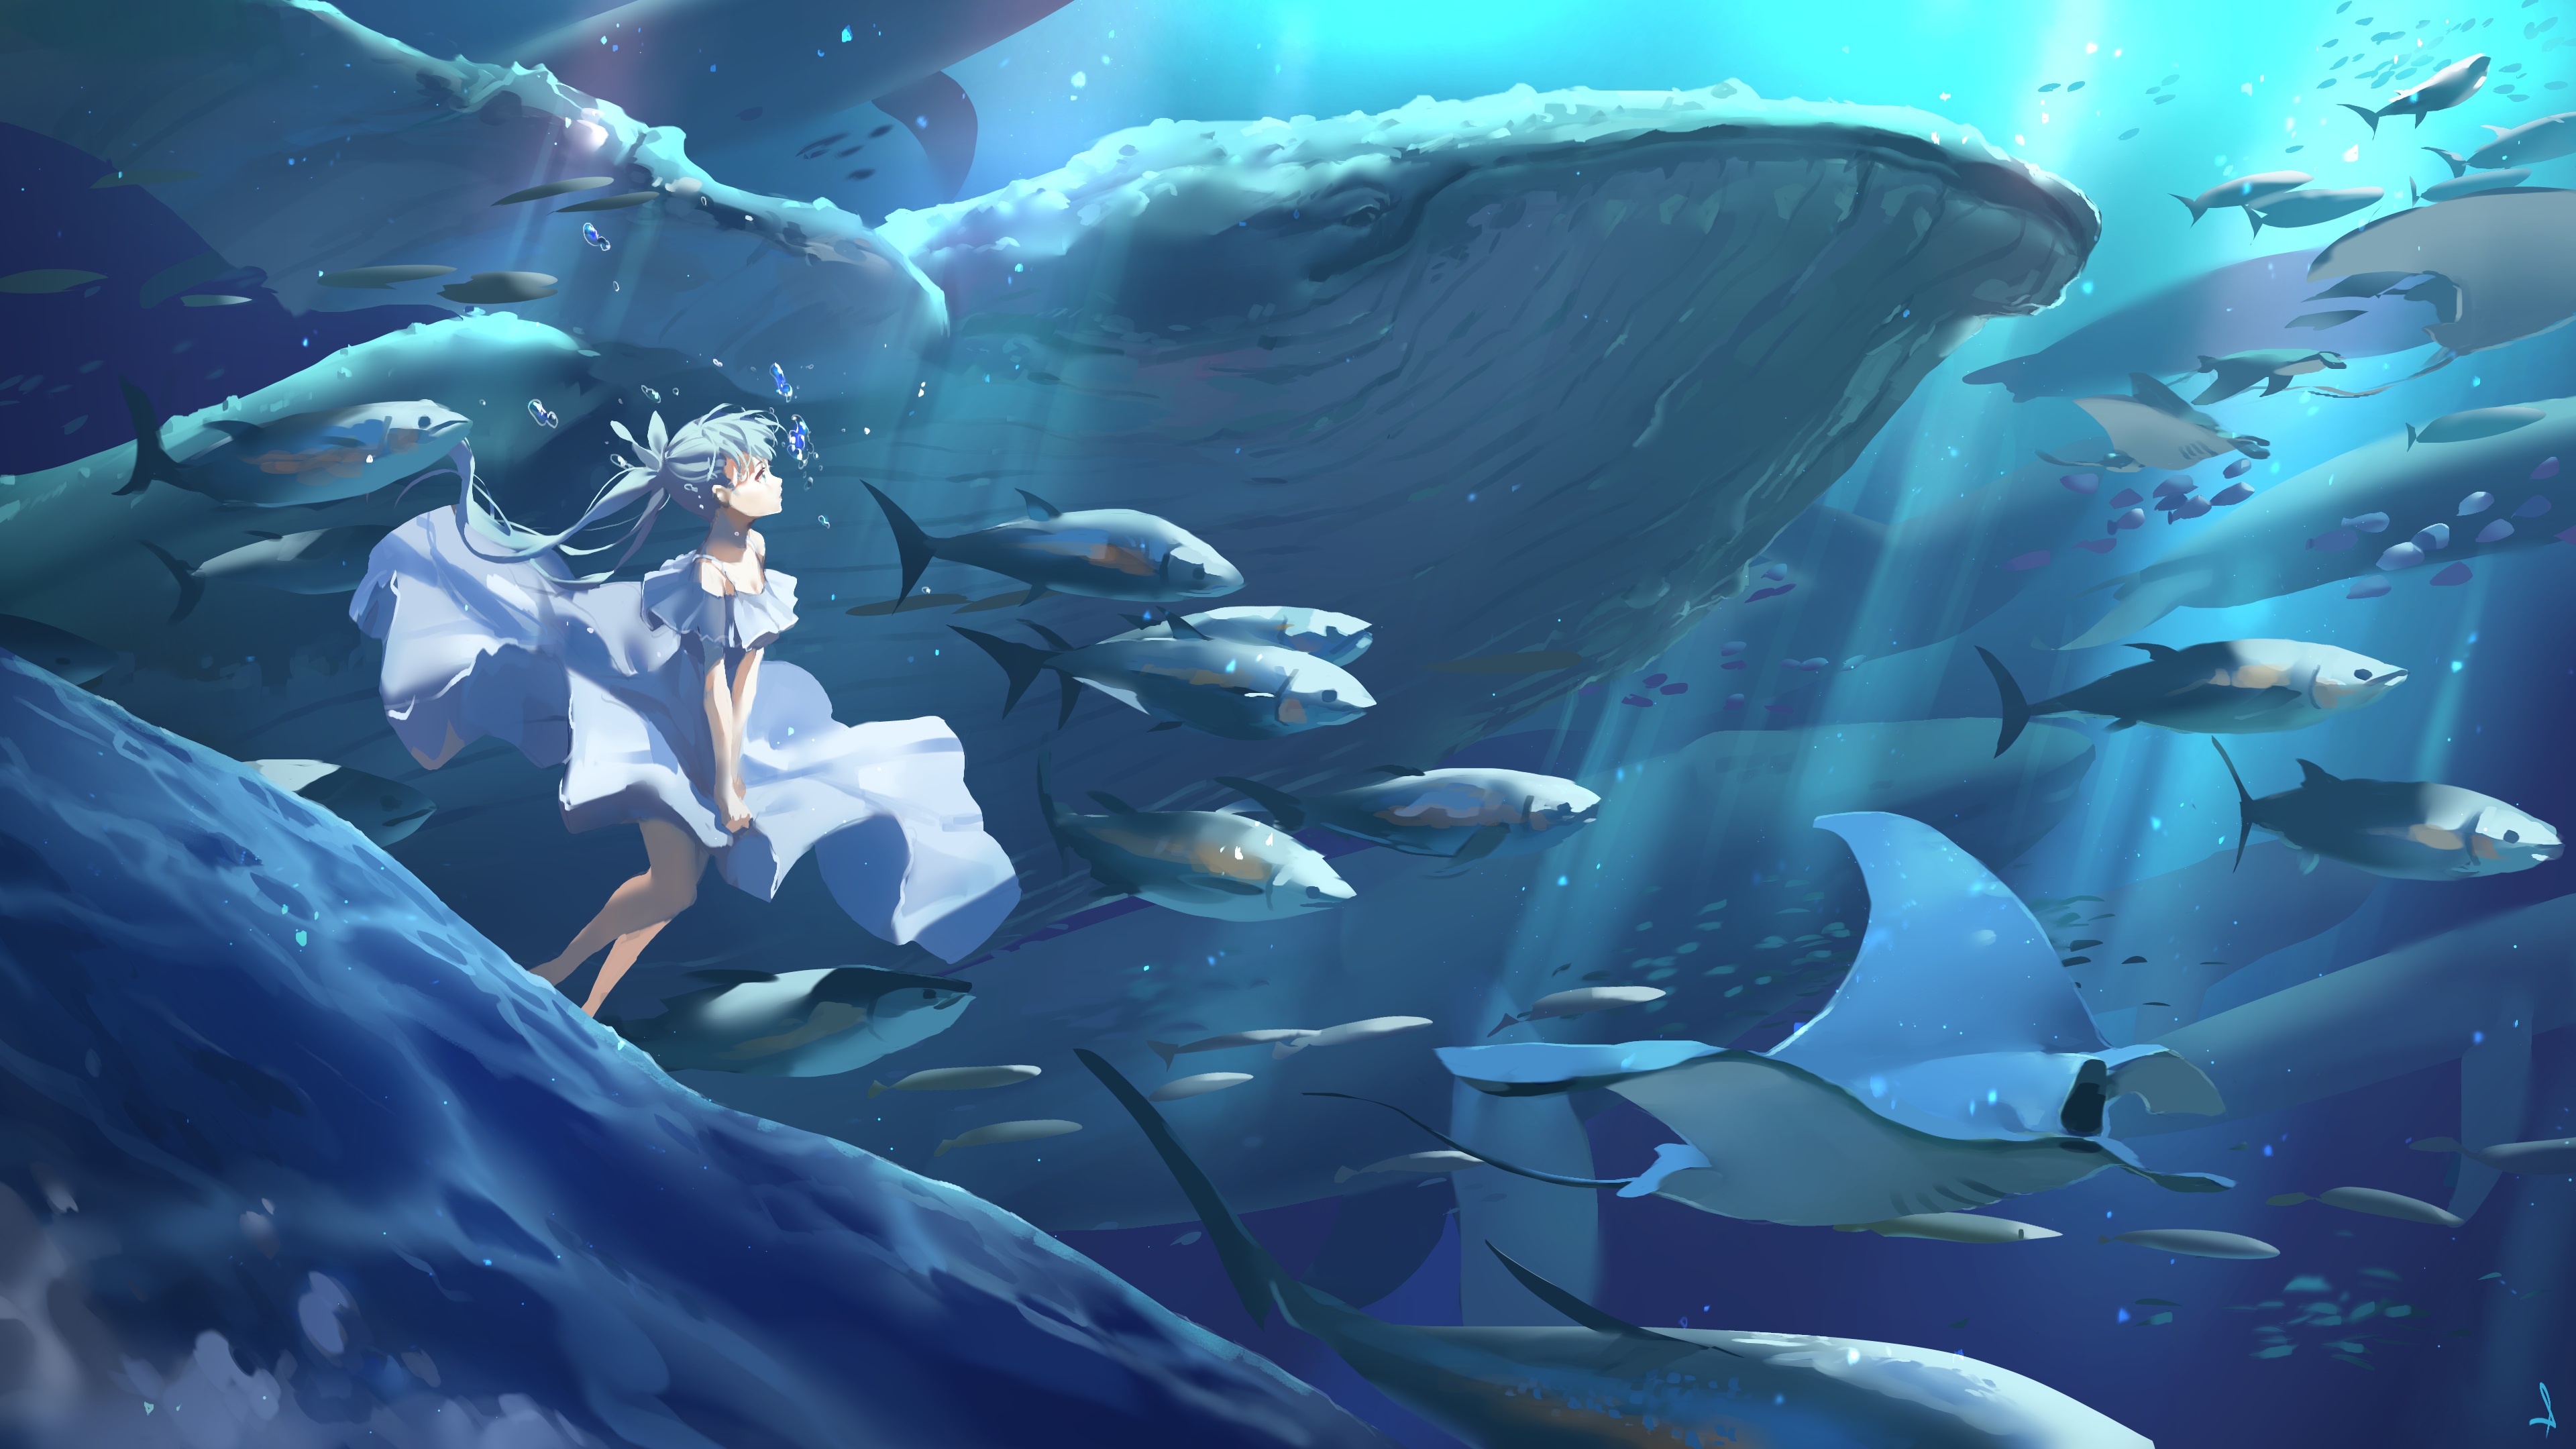 Anime Boy Underwater With Sea Creatures Live Wallpaper - MoeWalls